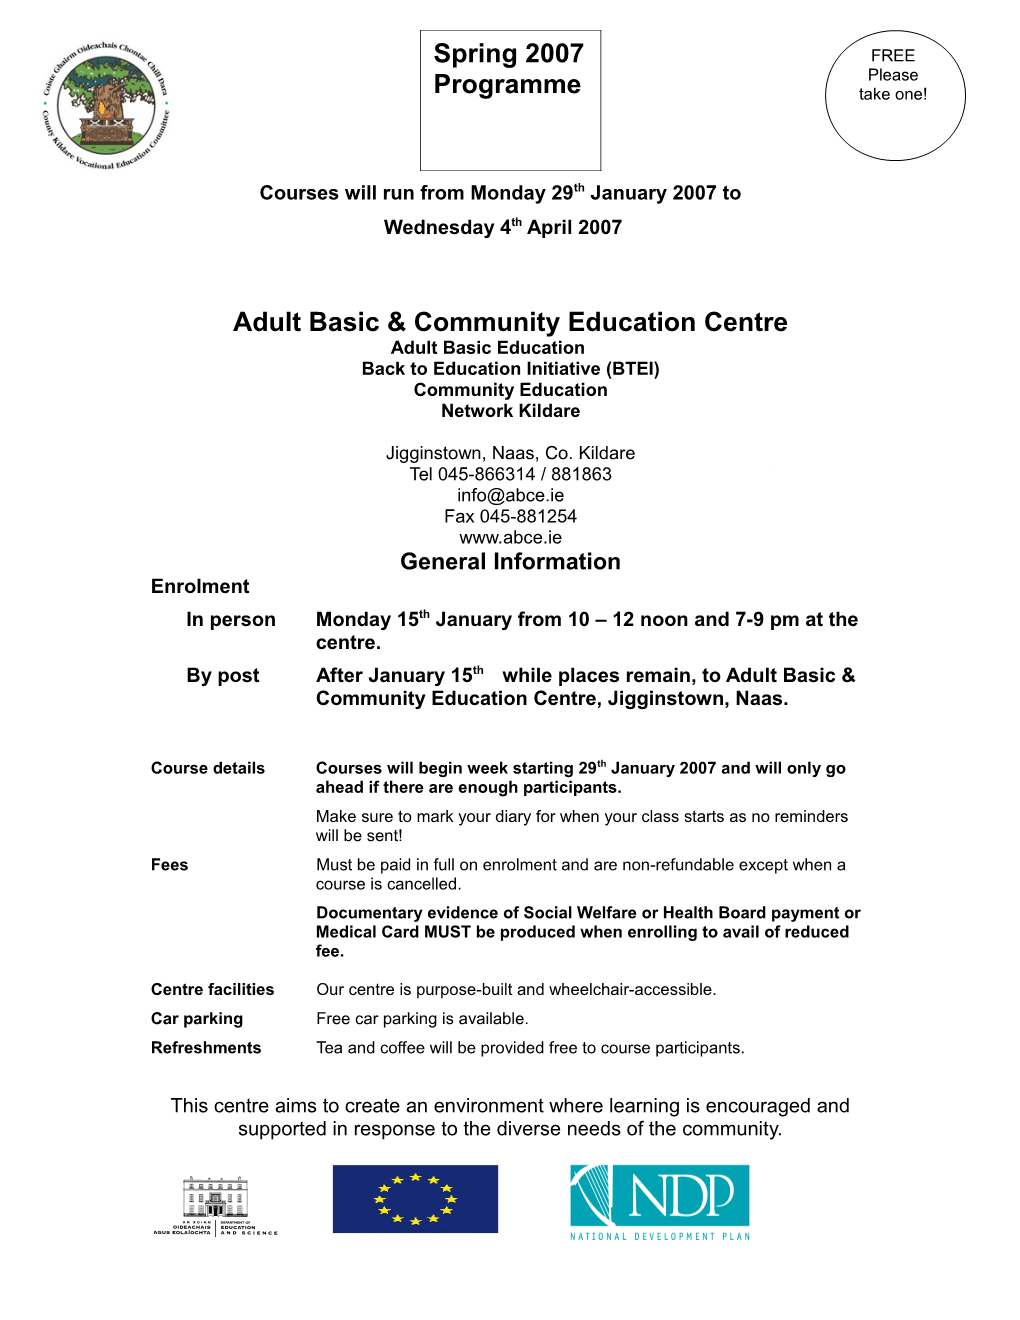 Adult Basic & Community Education Centre